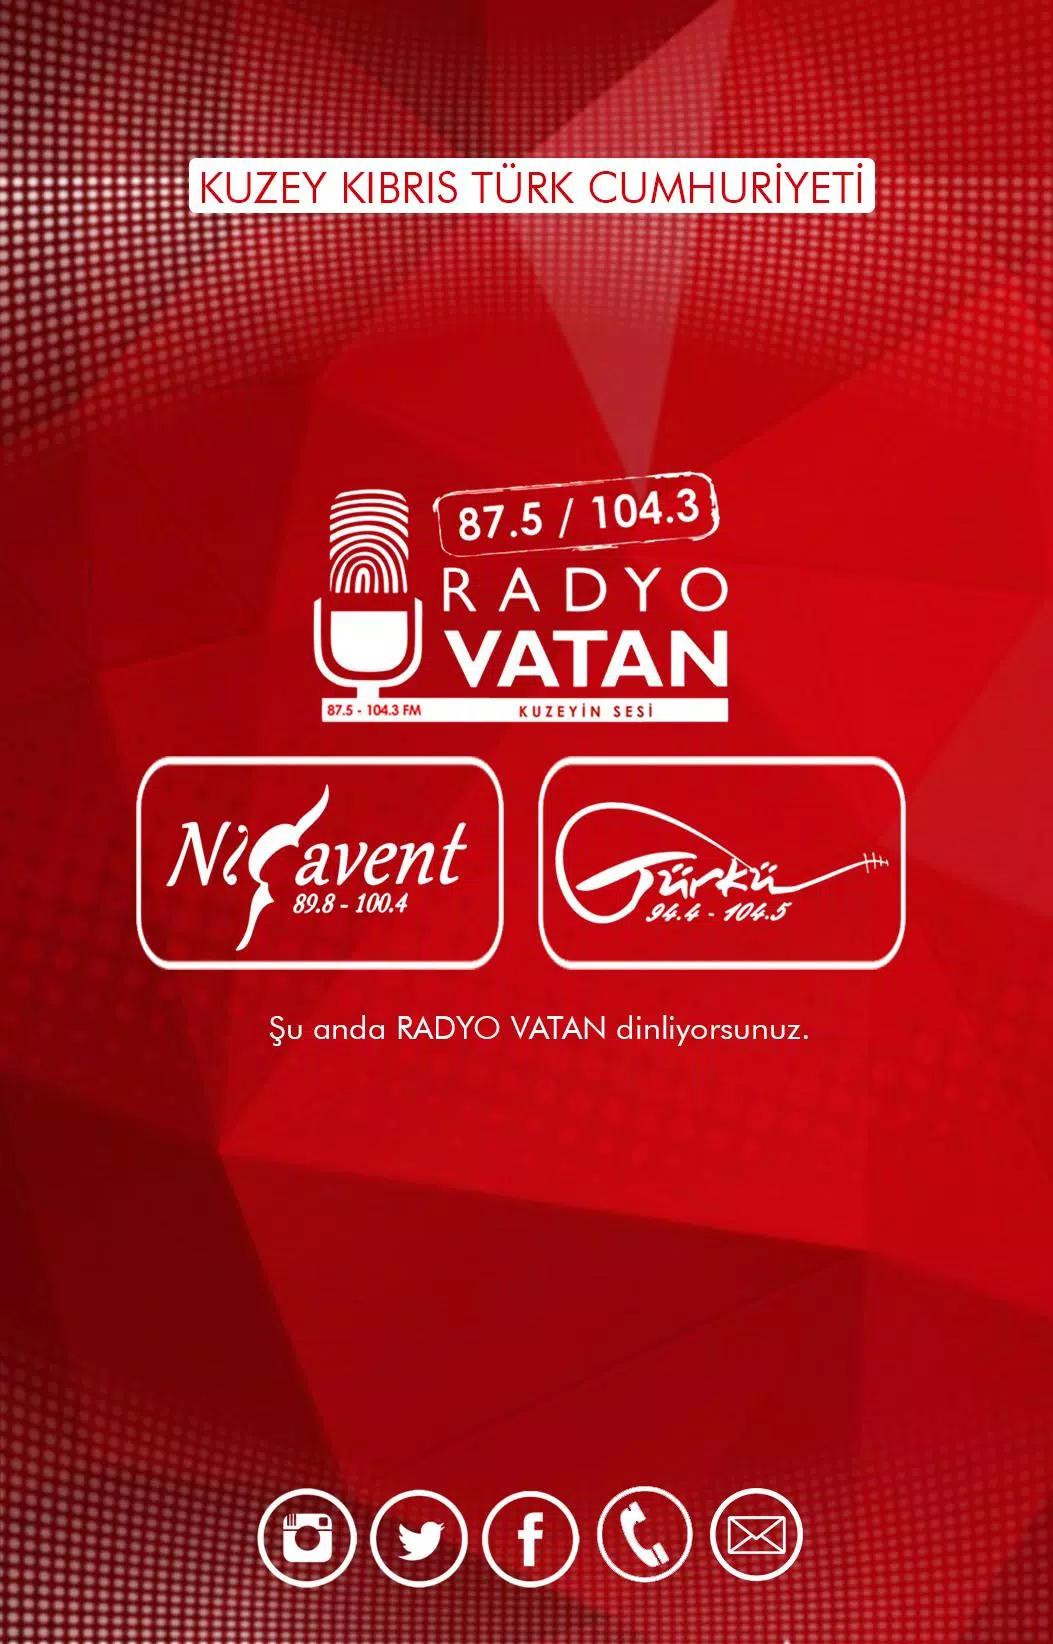 Radyo Vatan for Android - APK Download